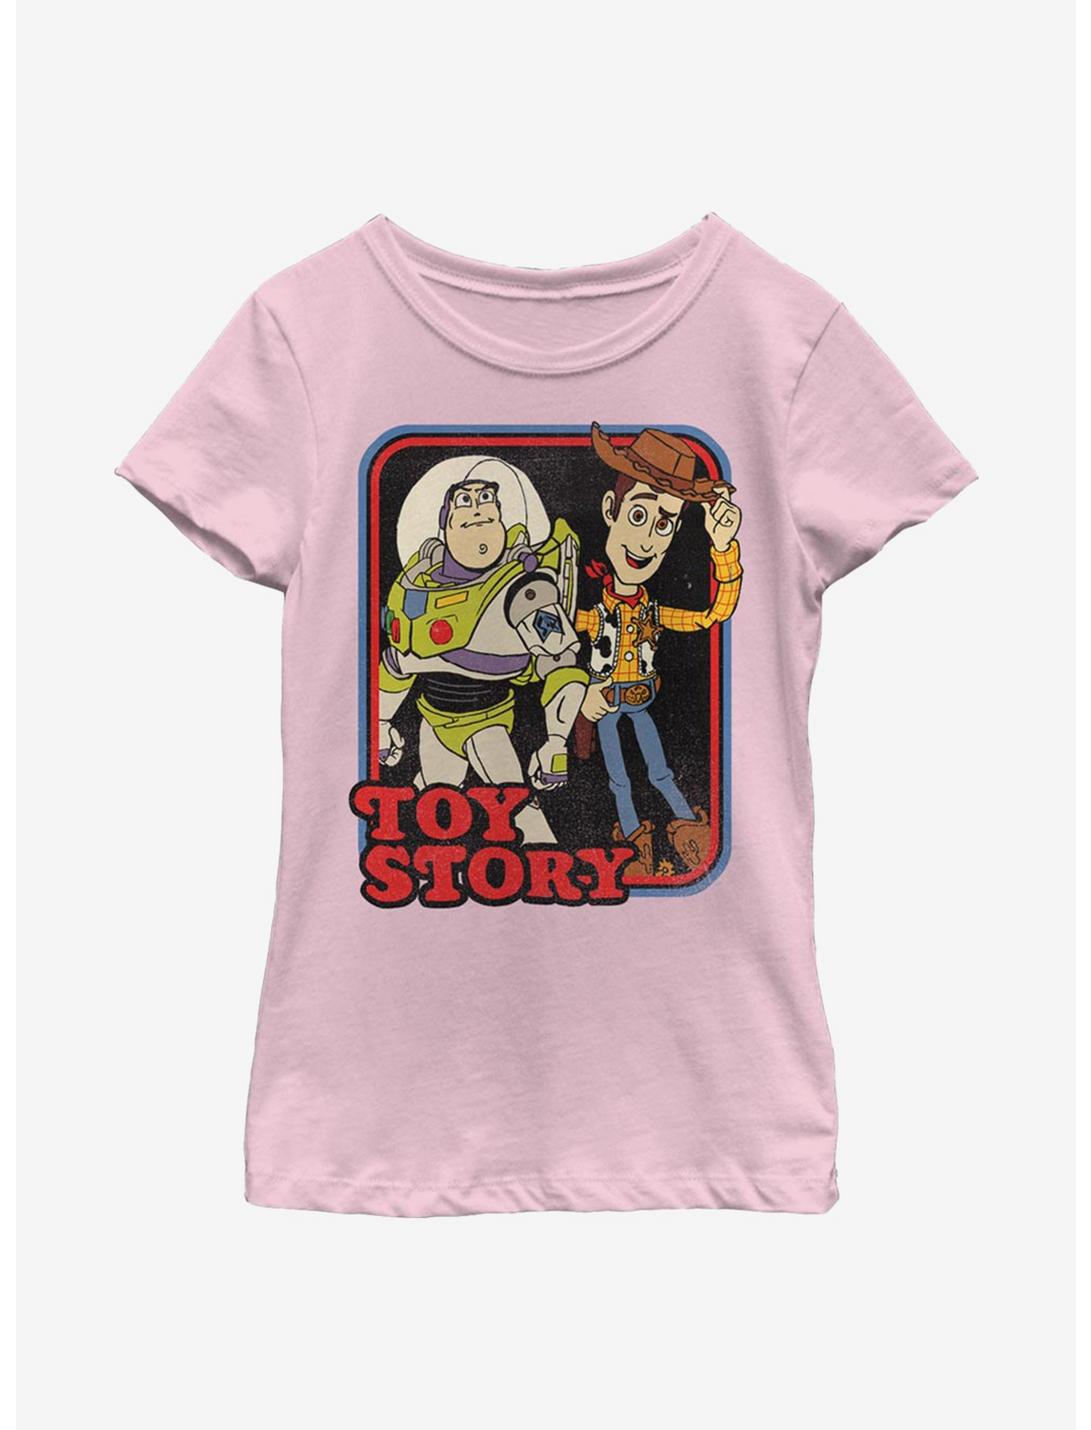 Disney Pixar Toy Story Storybook Youth Girls T-Shirt, PINK, hi-res